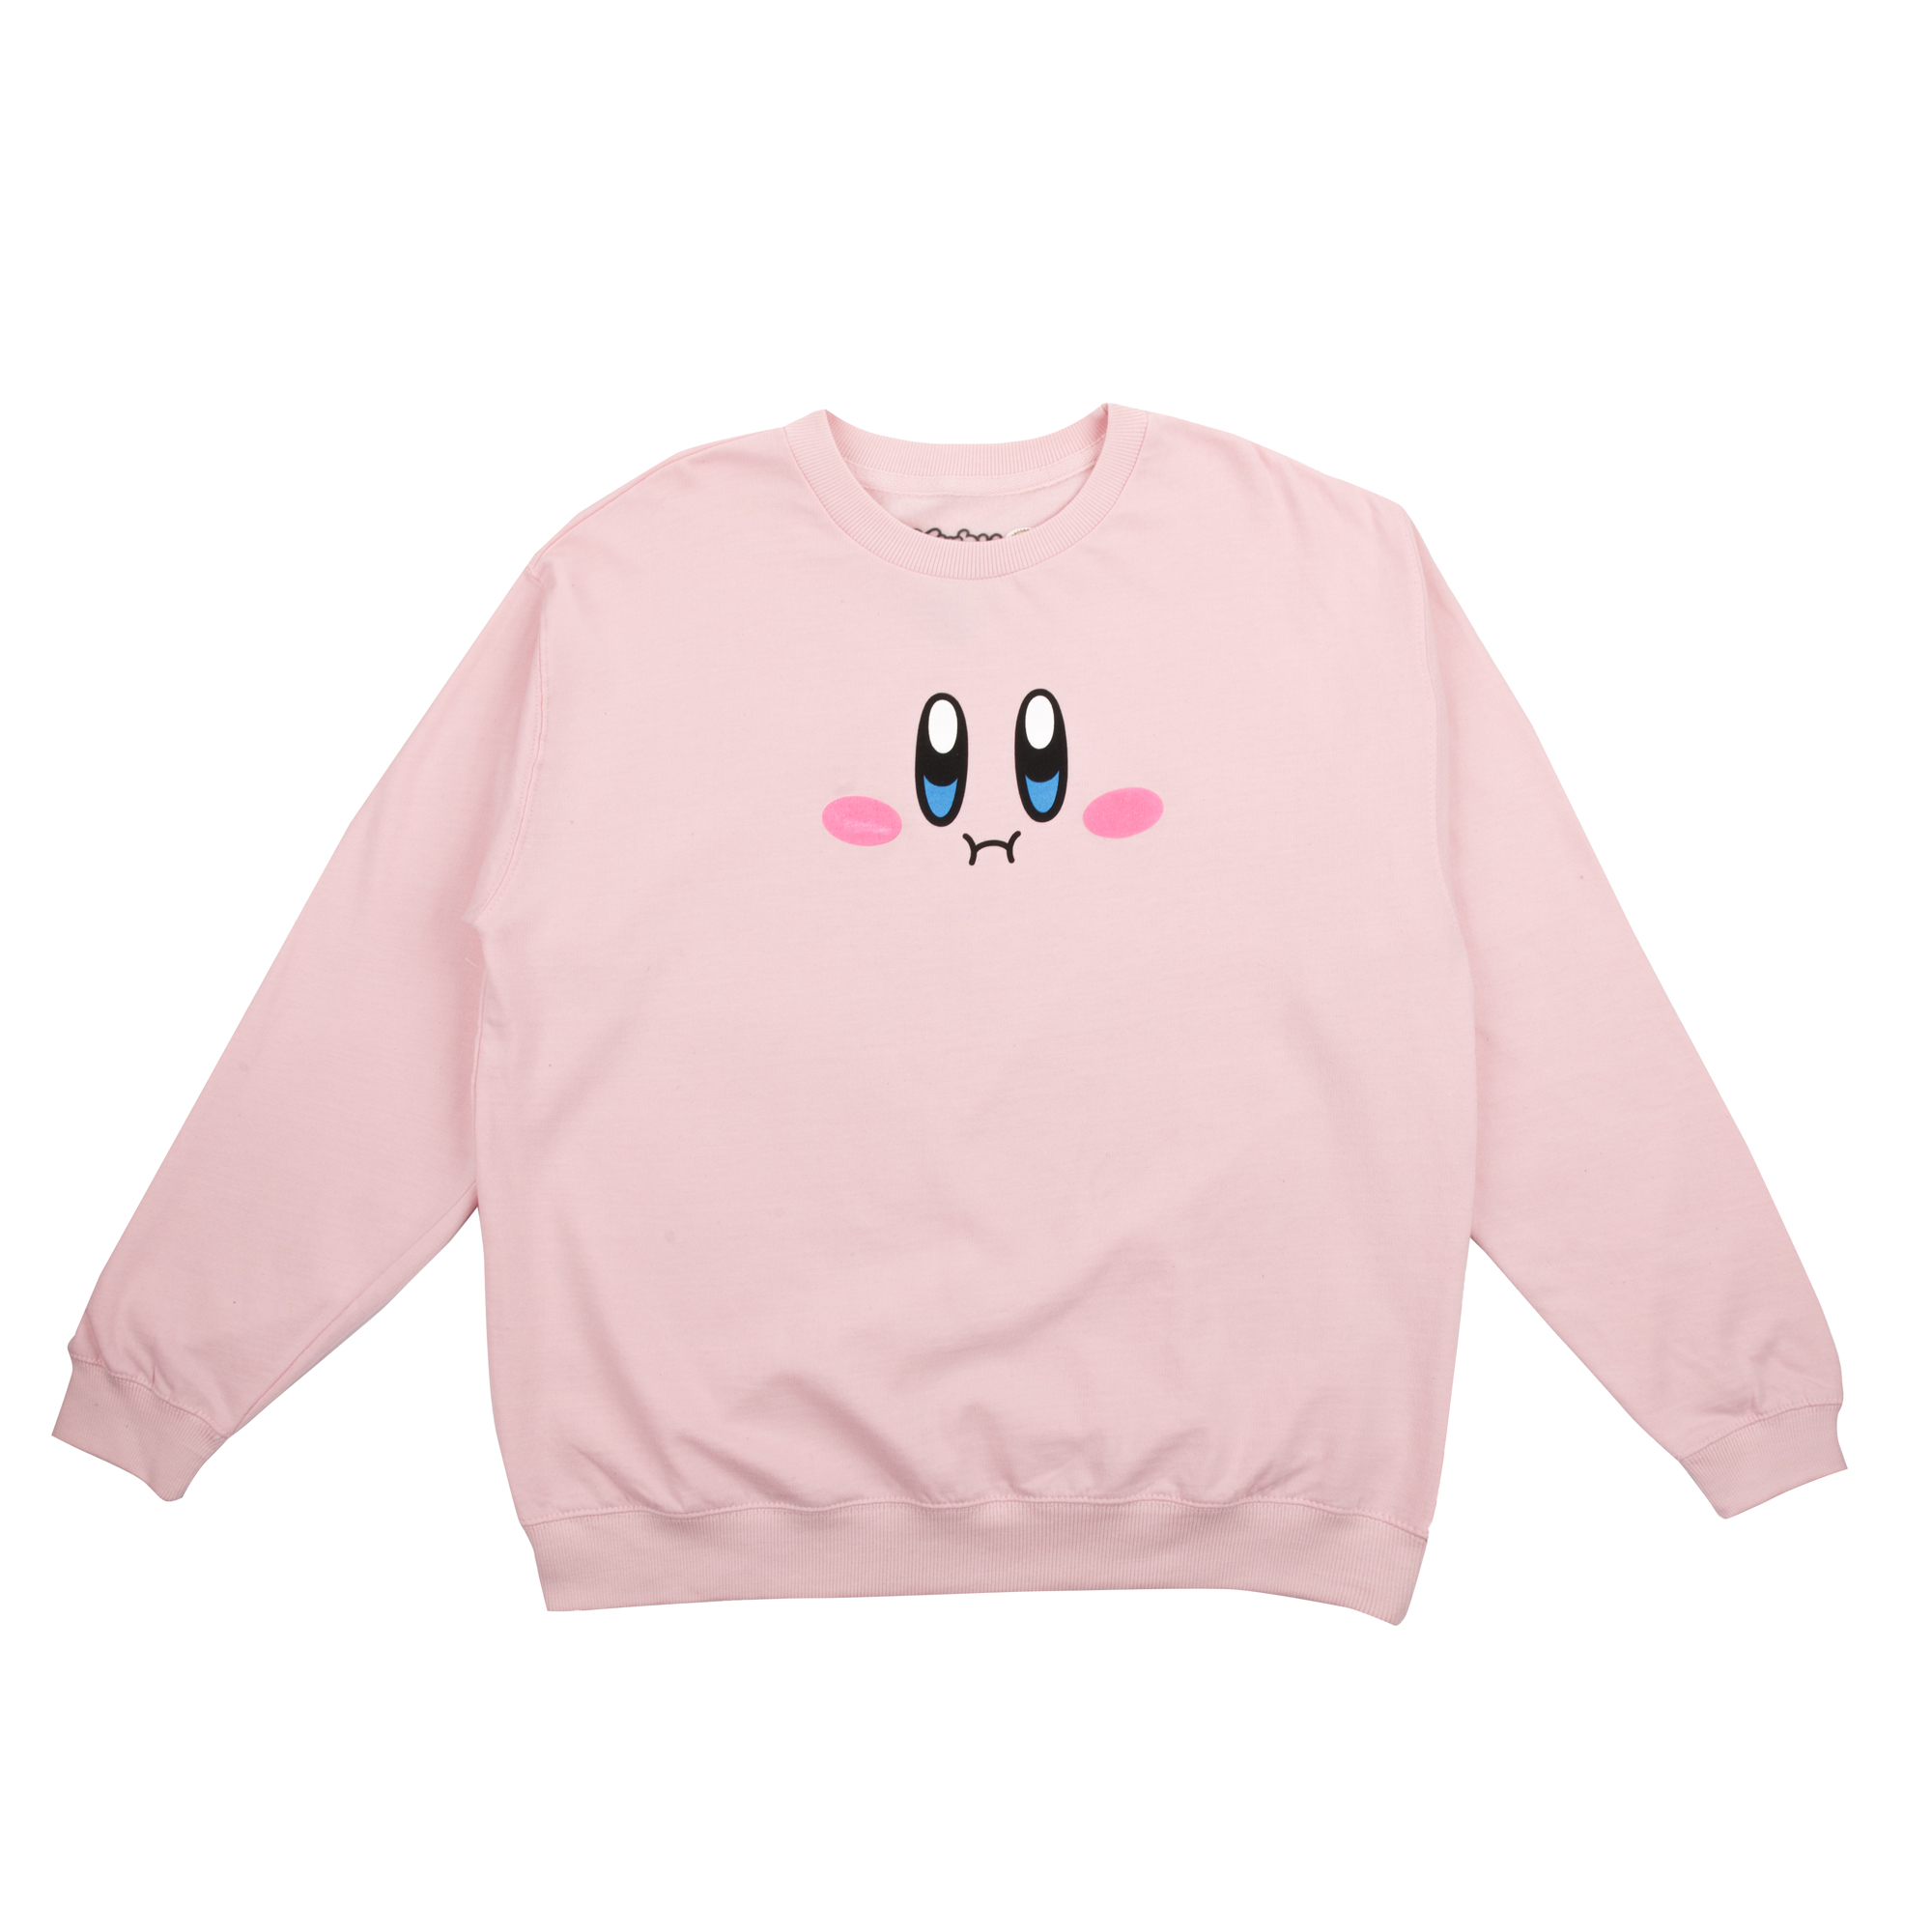 Kirby - Kirby's Face Sweatshirt image count 0